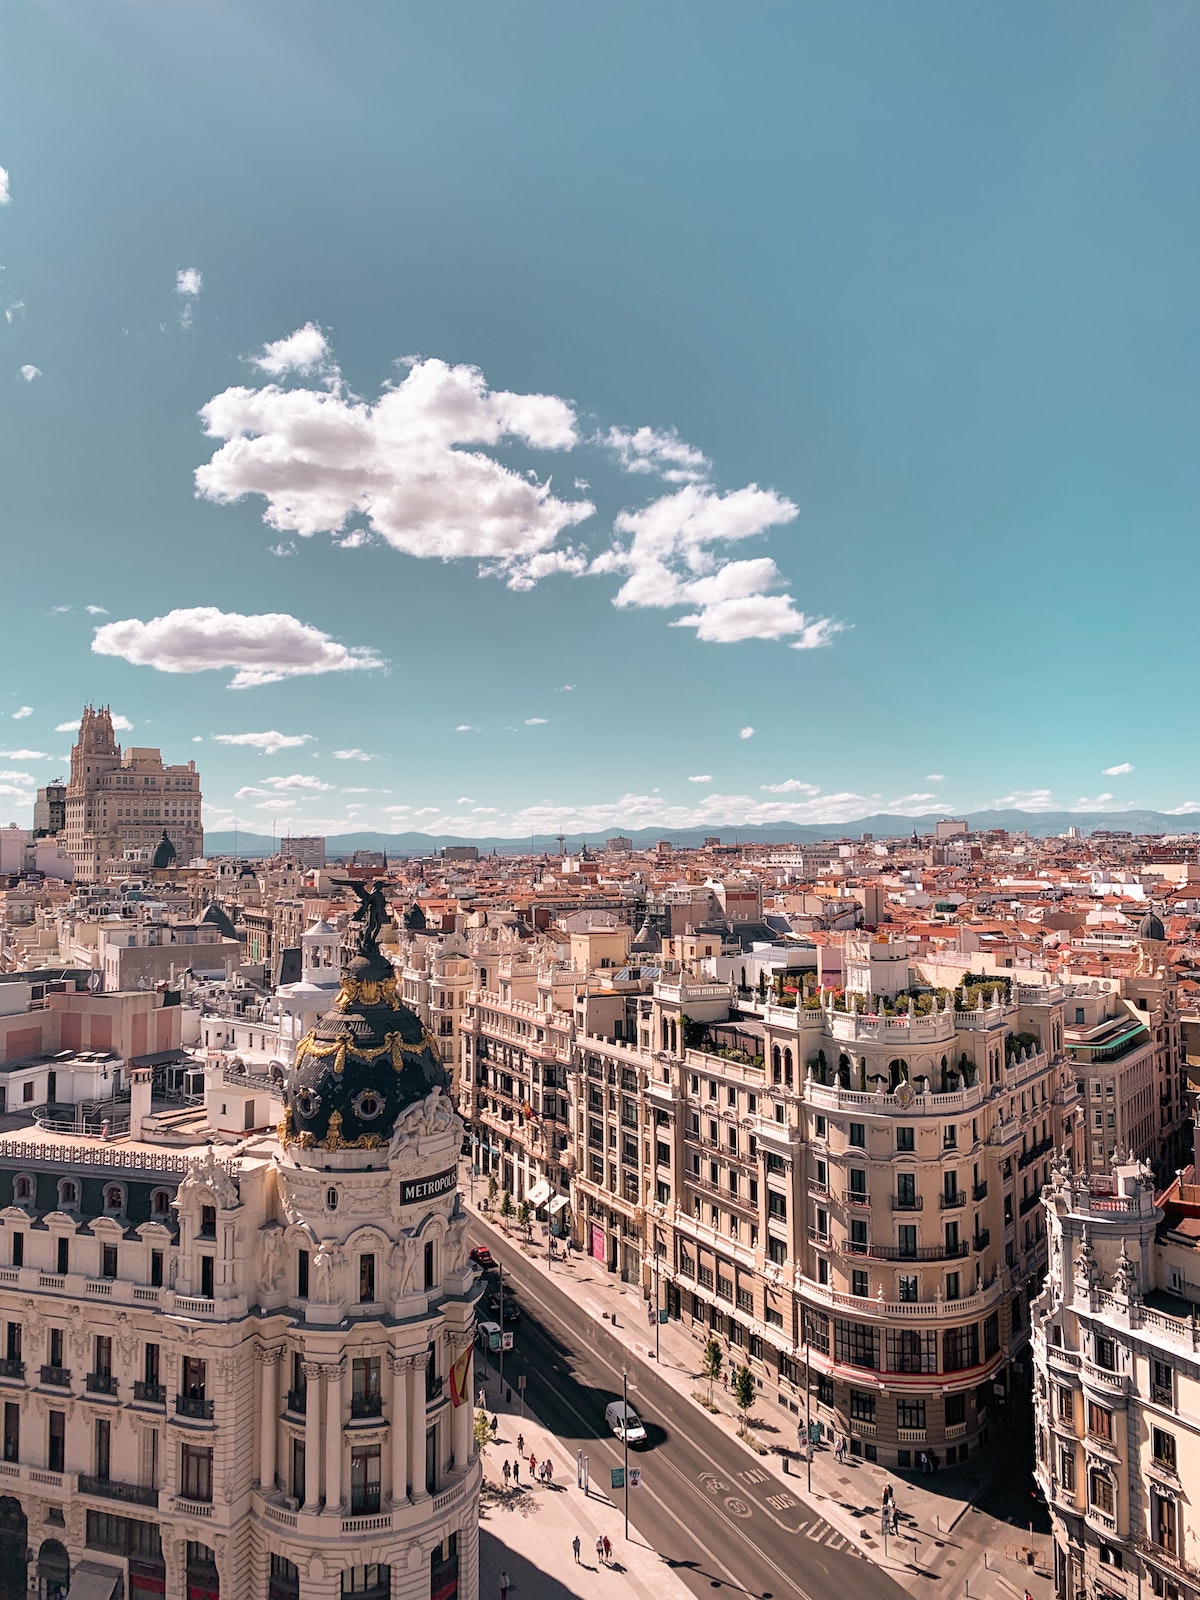 Overhead view of Gran Via street in Madrid city center.